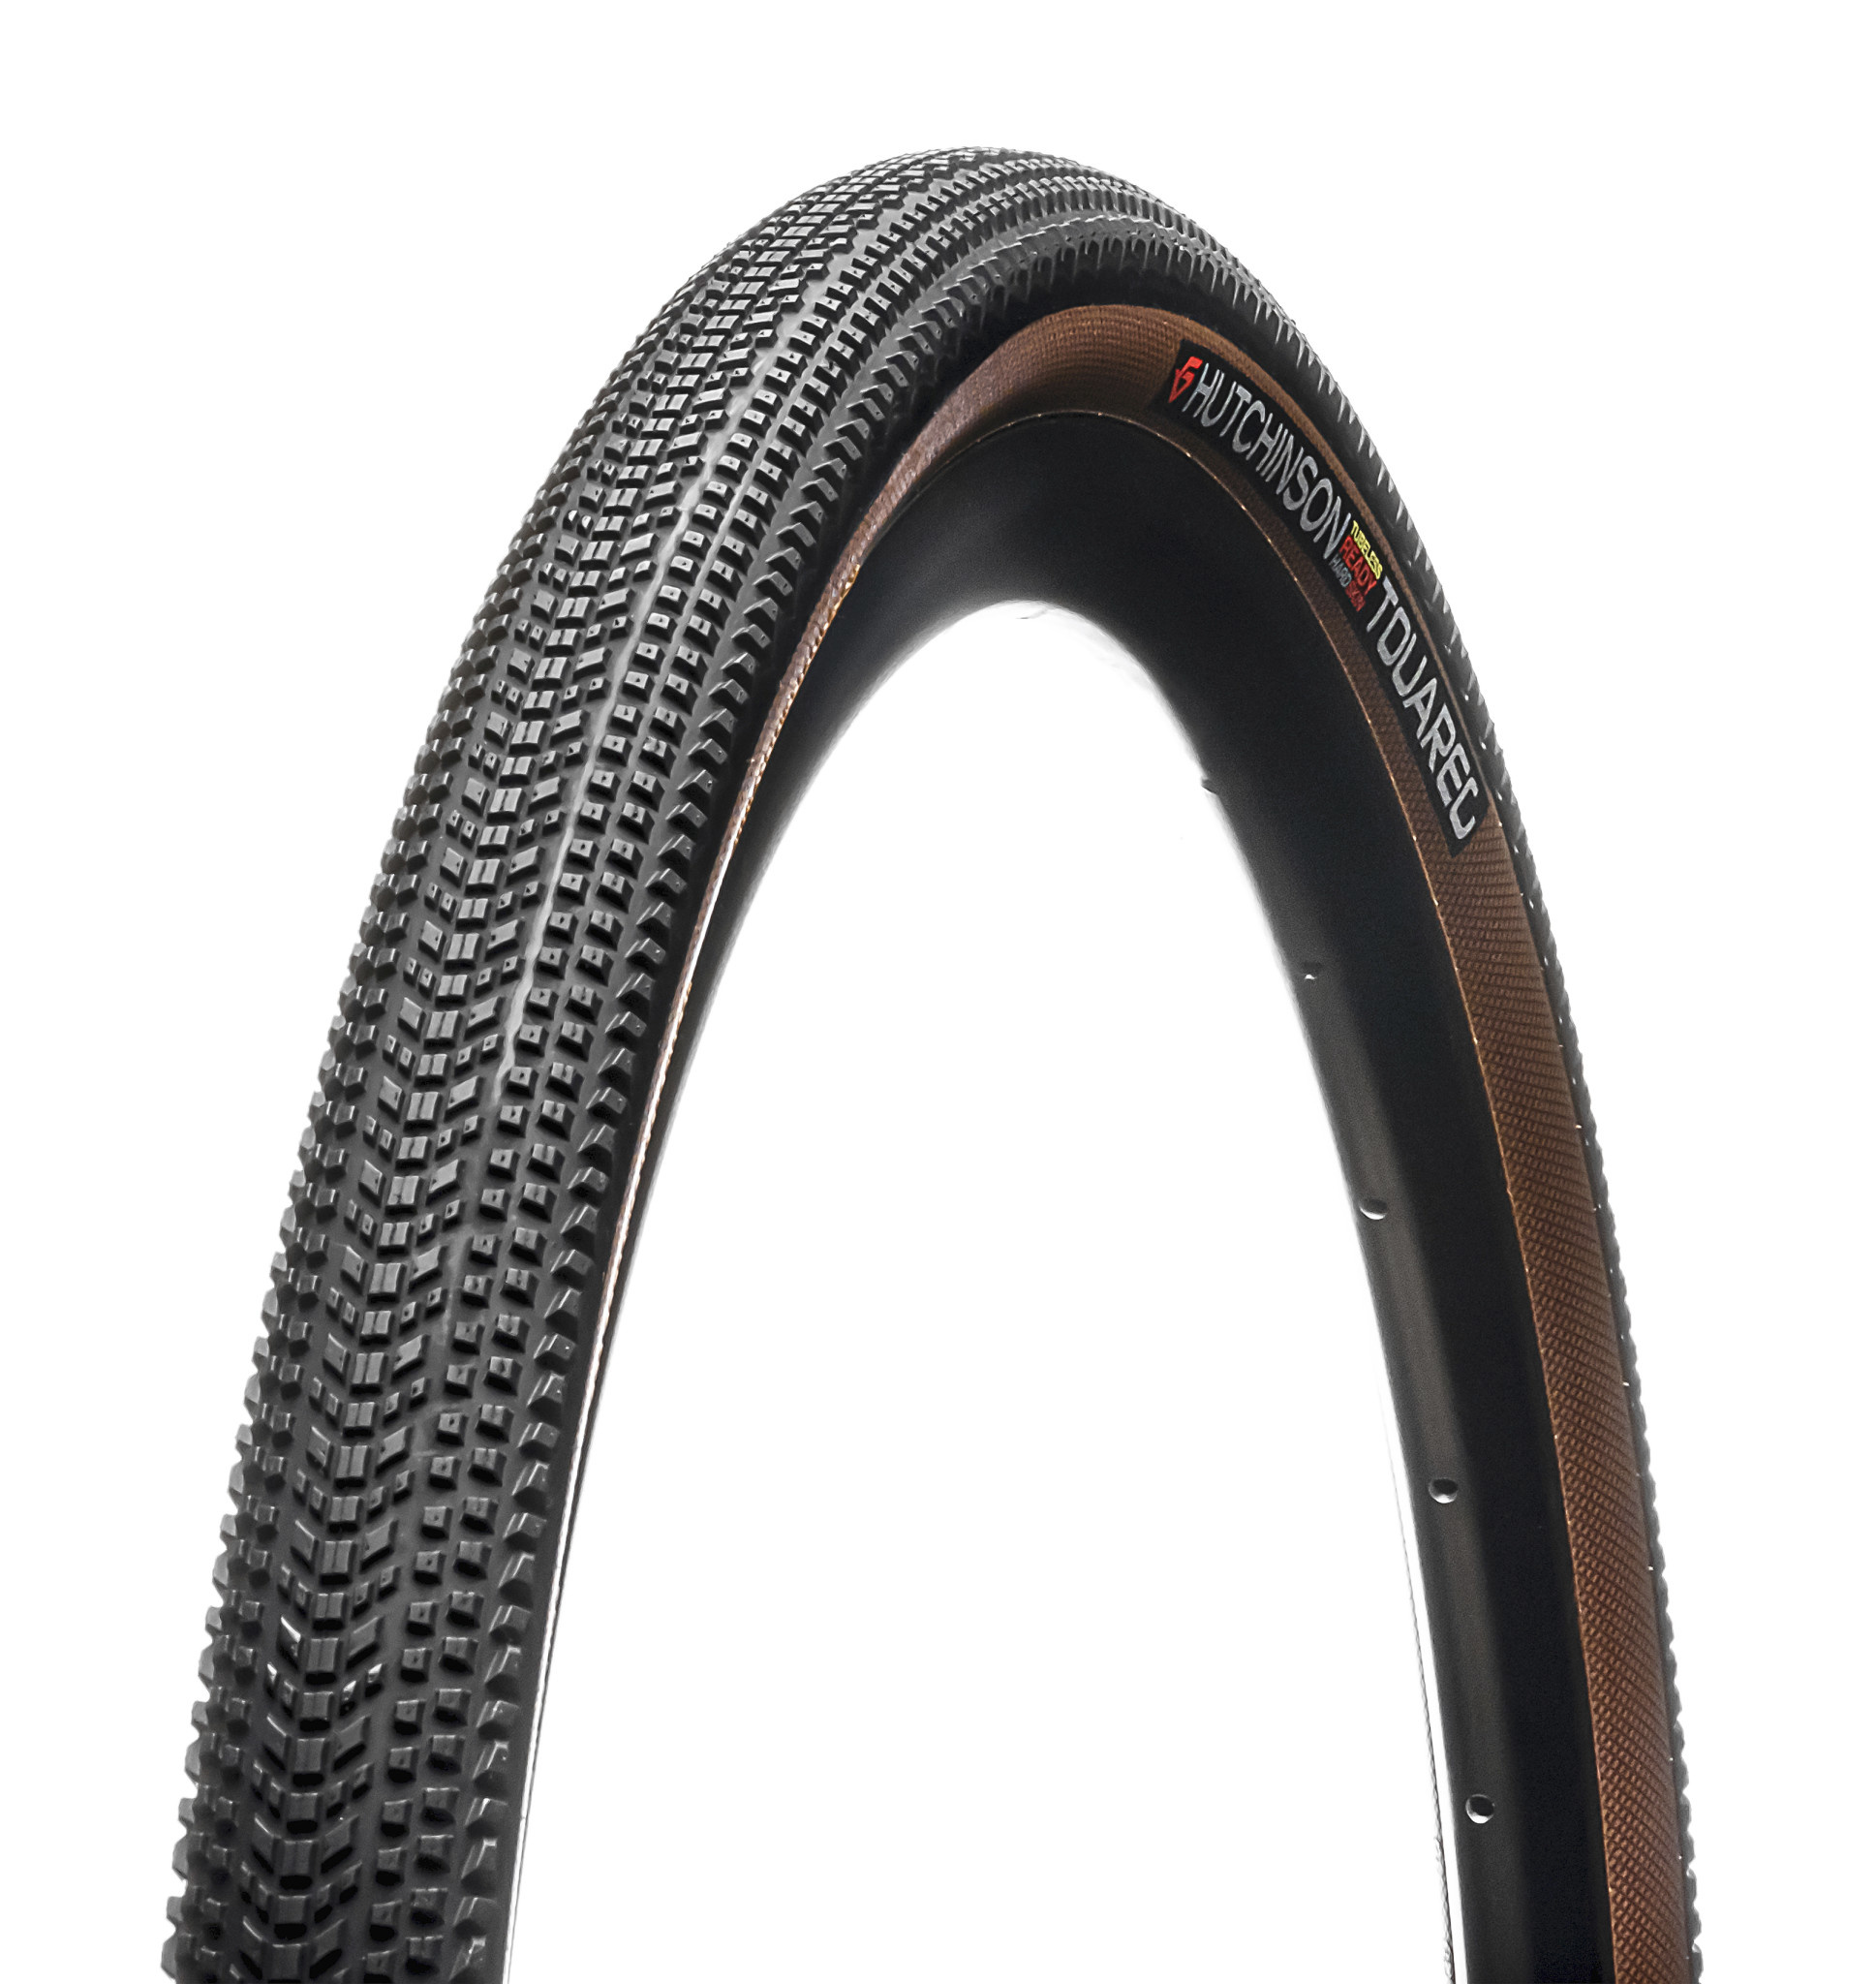 tan wall gravel tyres